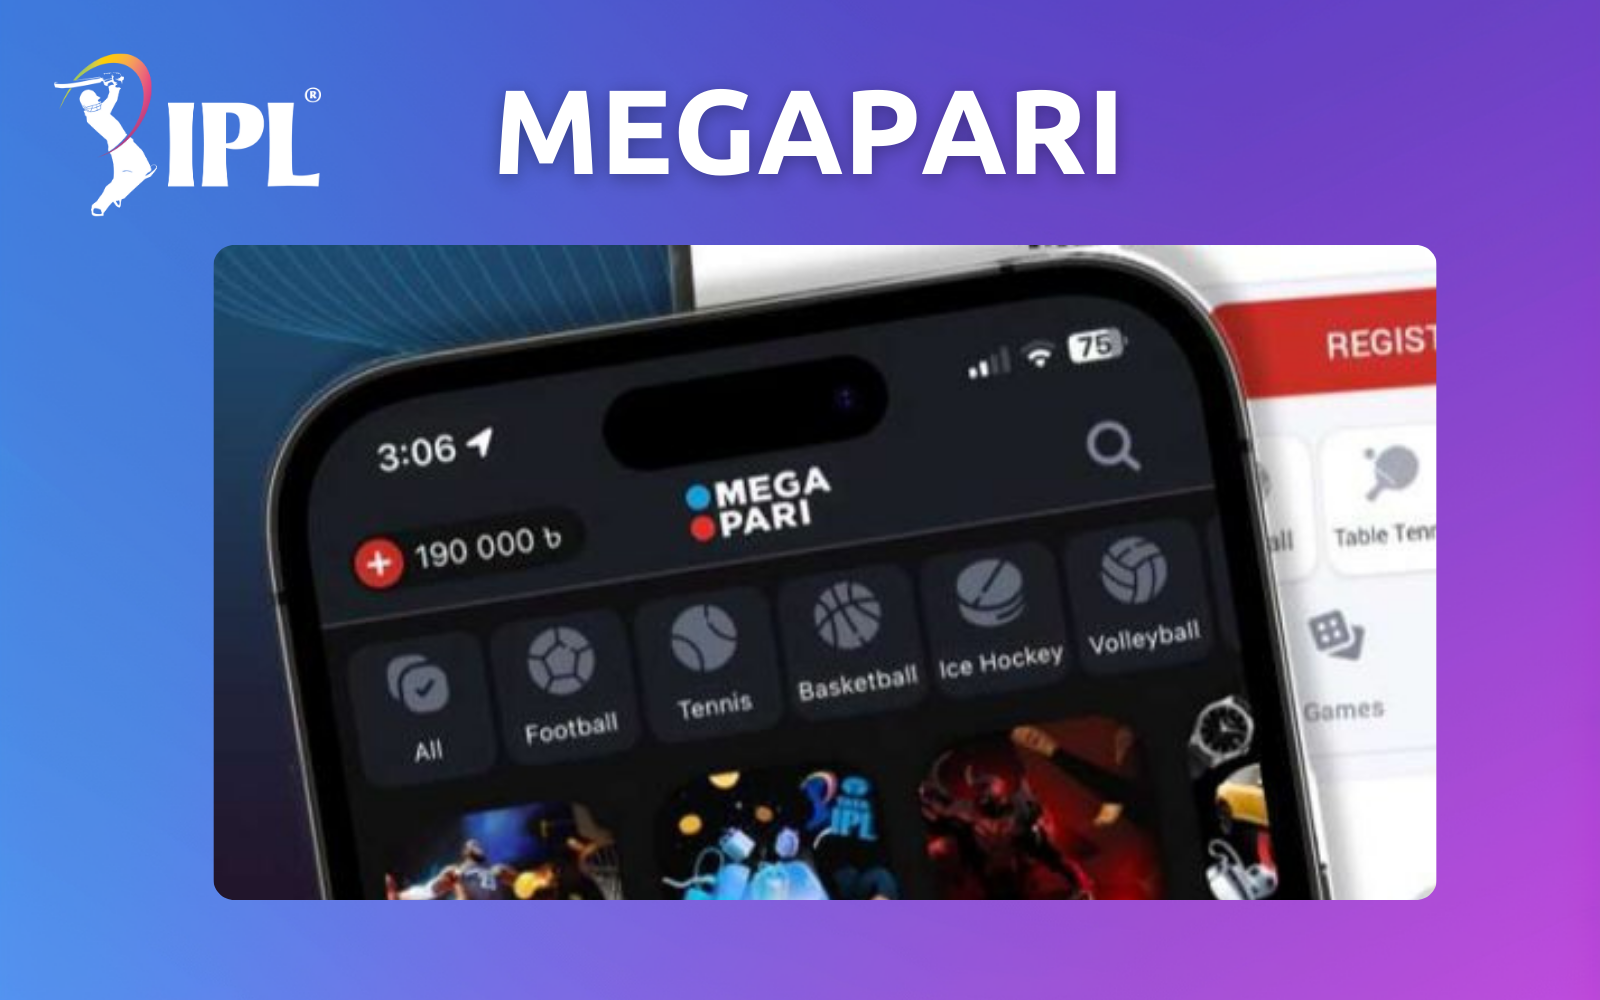 IPL Megapari betting application overview